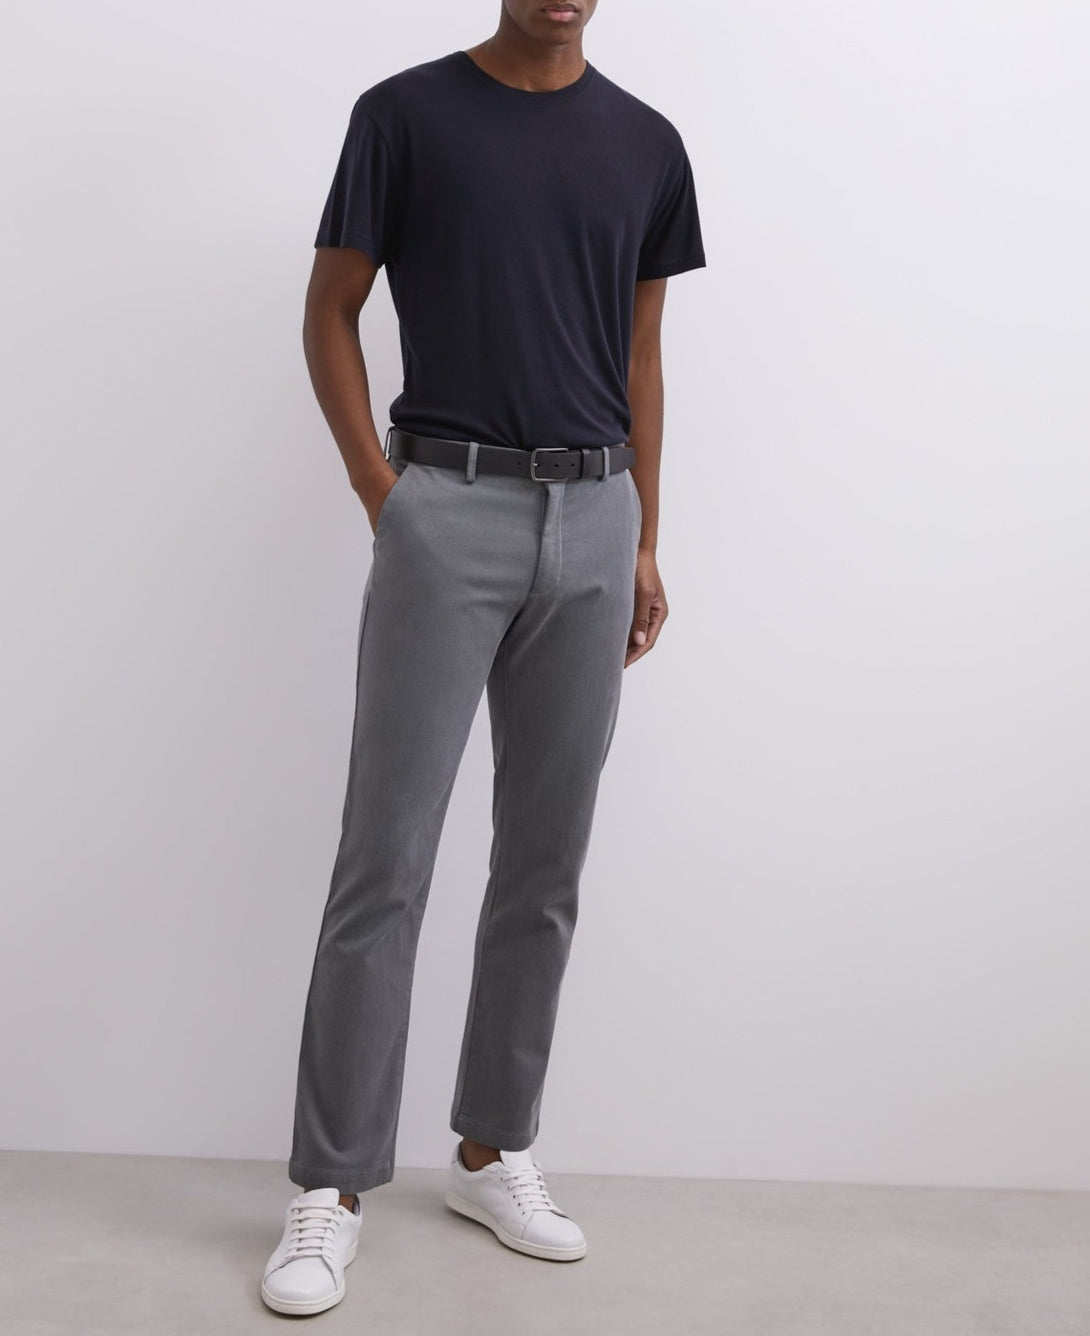 Men Trousers | Grey Ankle Length Cotton Pants by Spanish designer Adolfo Dominguez